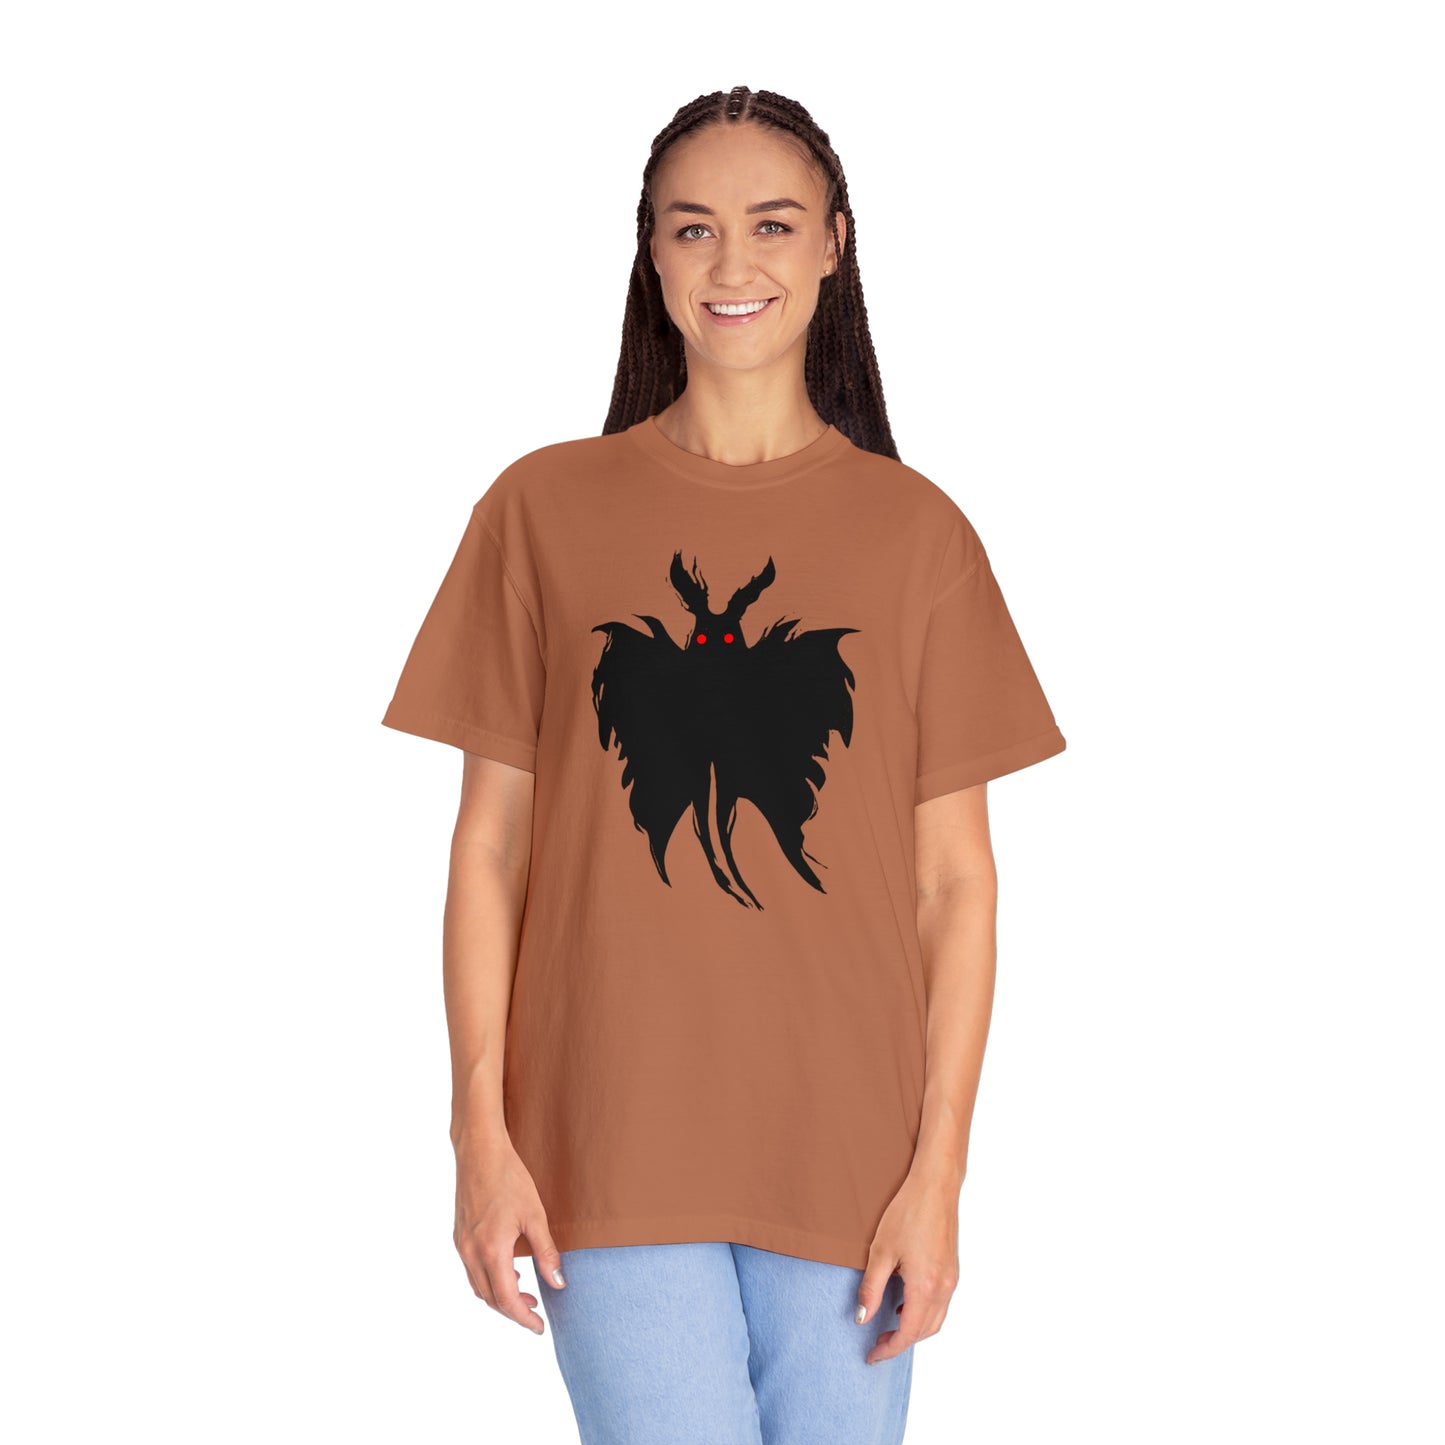 Creepy Unisex Mothman Silhouette Halloween T-Shirt - Comfort Colors Spooky Season Cryptid T-shirt